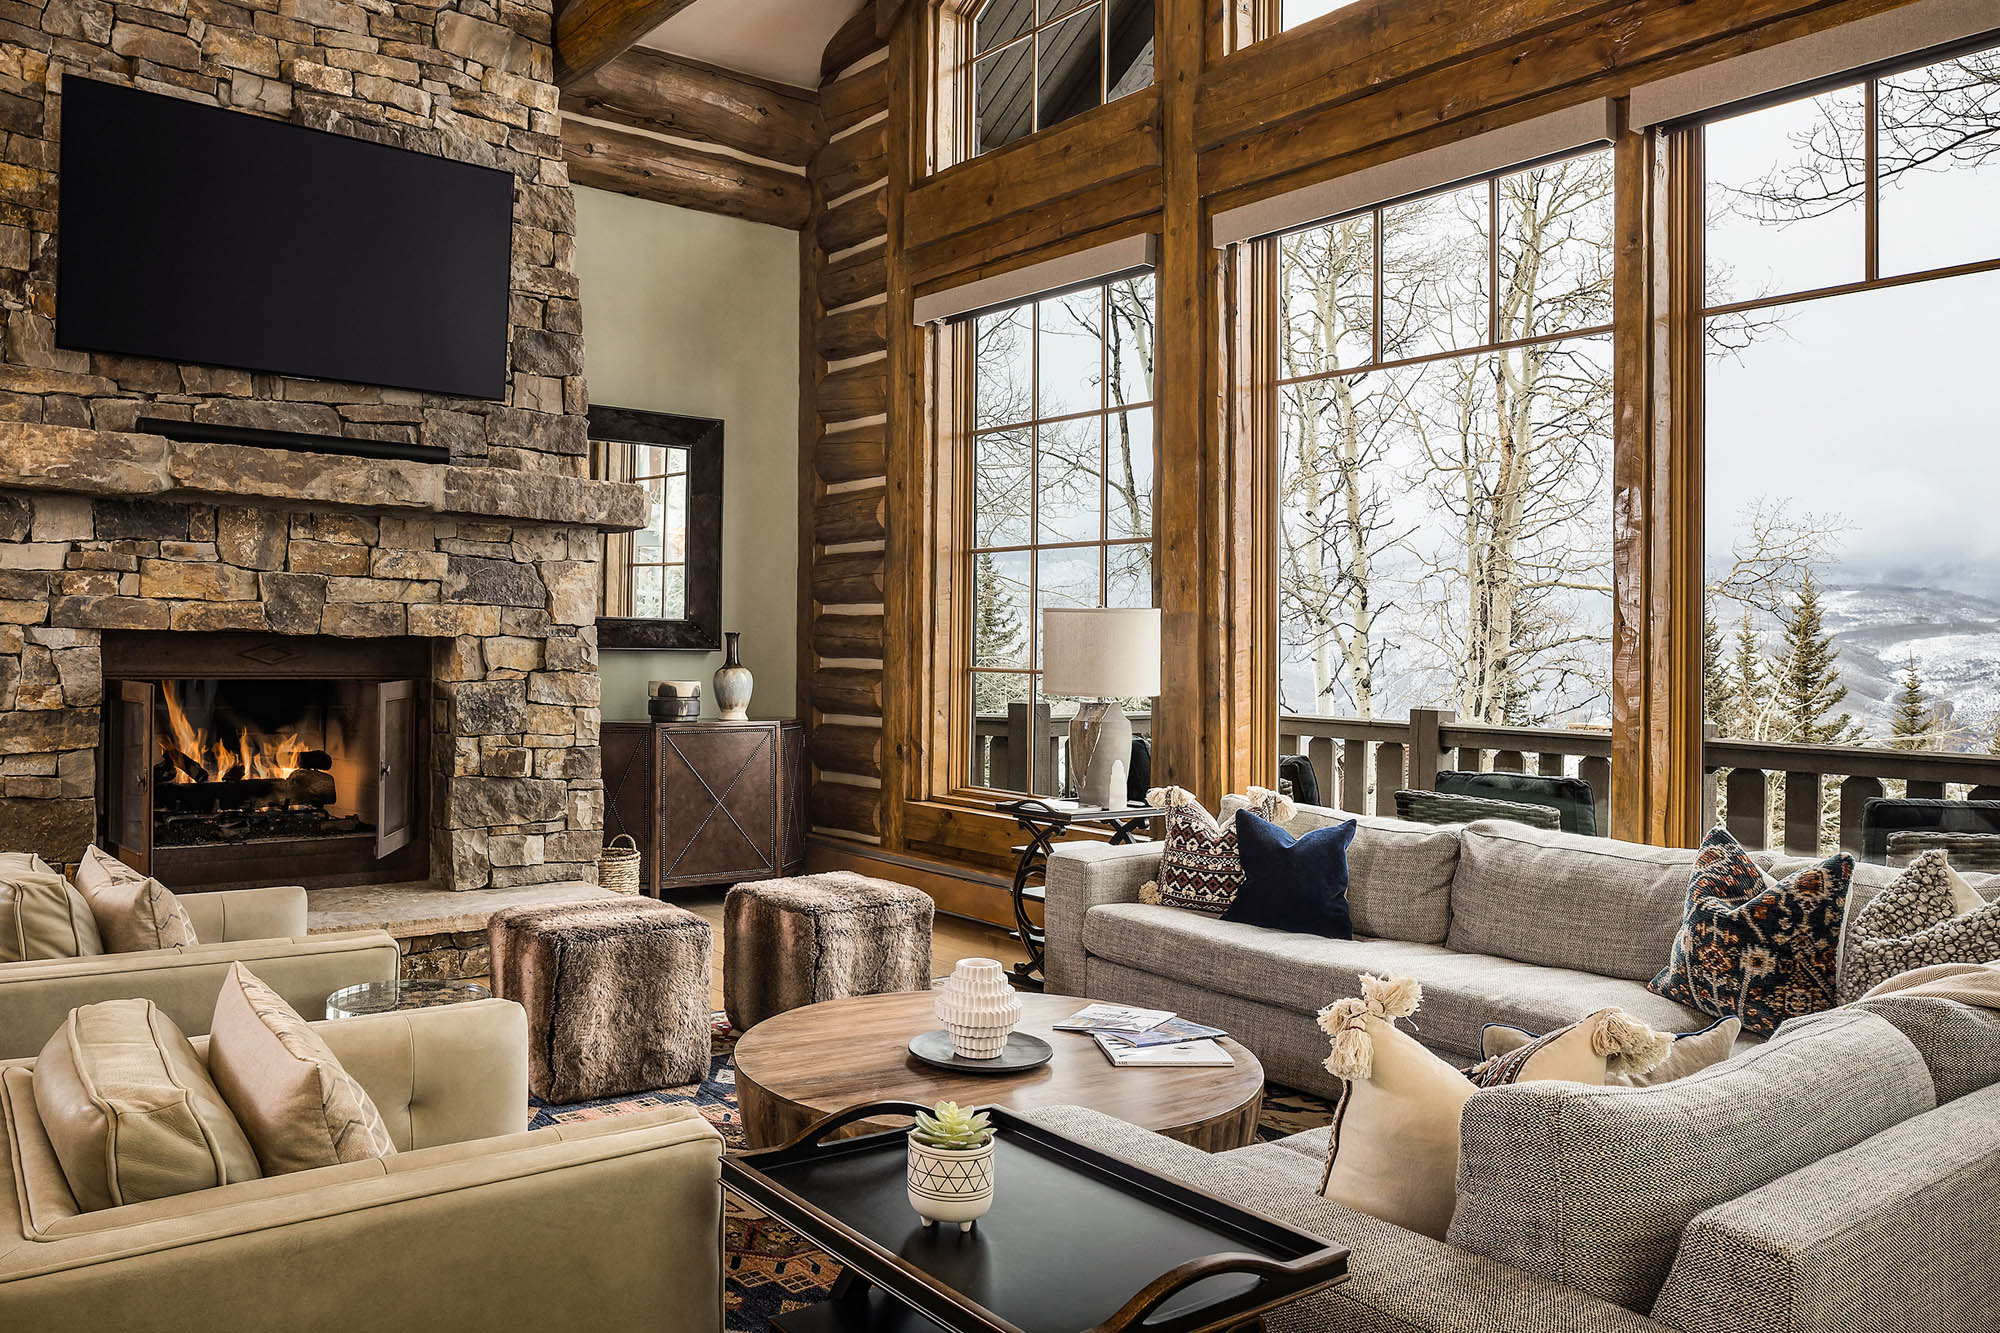 Colorado-Beaver_Creek-Bachelor_Gulch-Inspirato-Timber_Haven-Living_Room-Fireplace